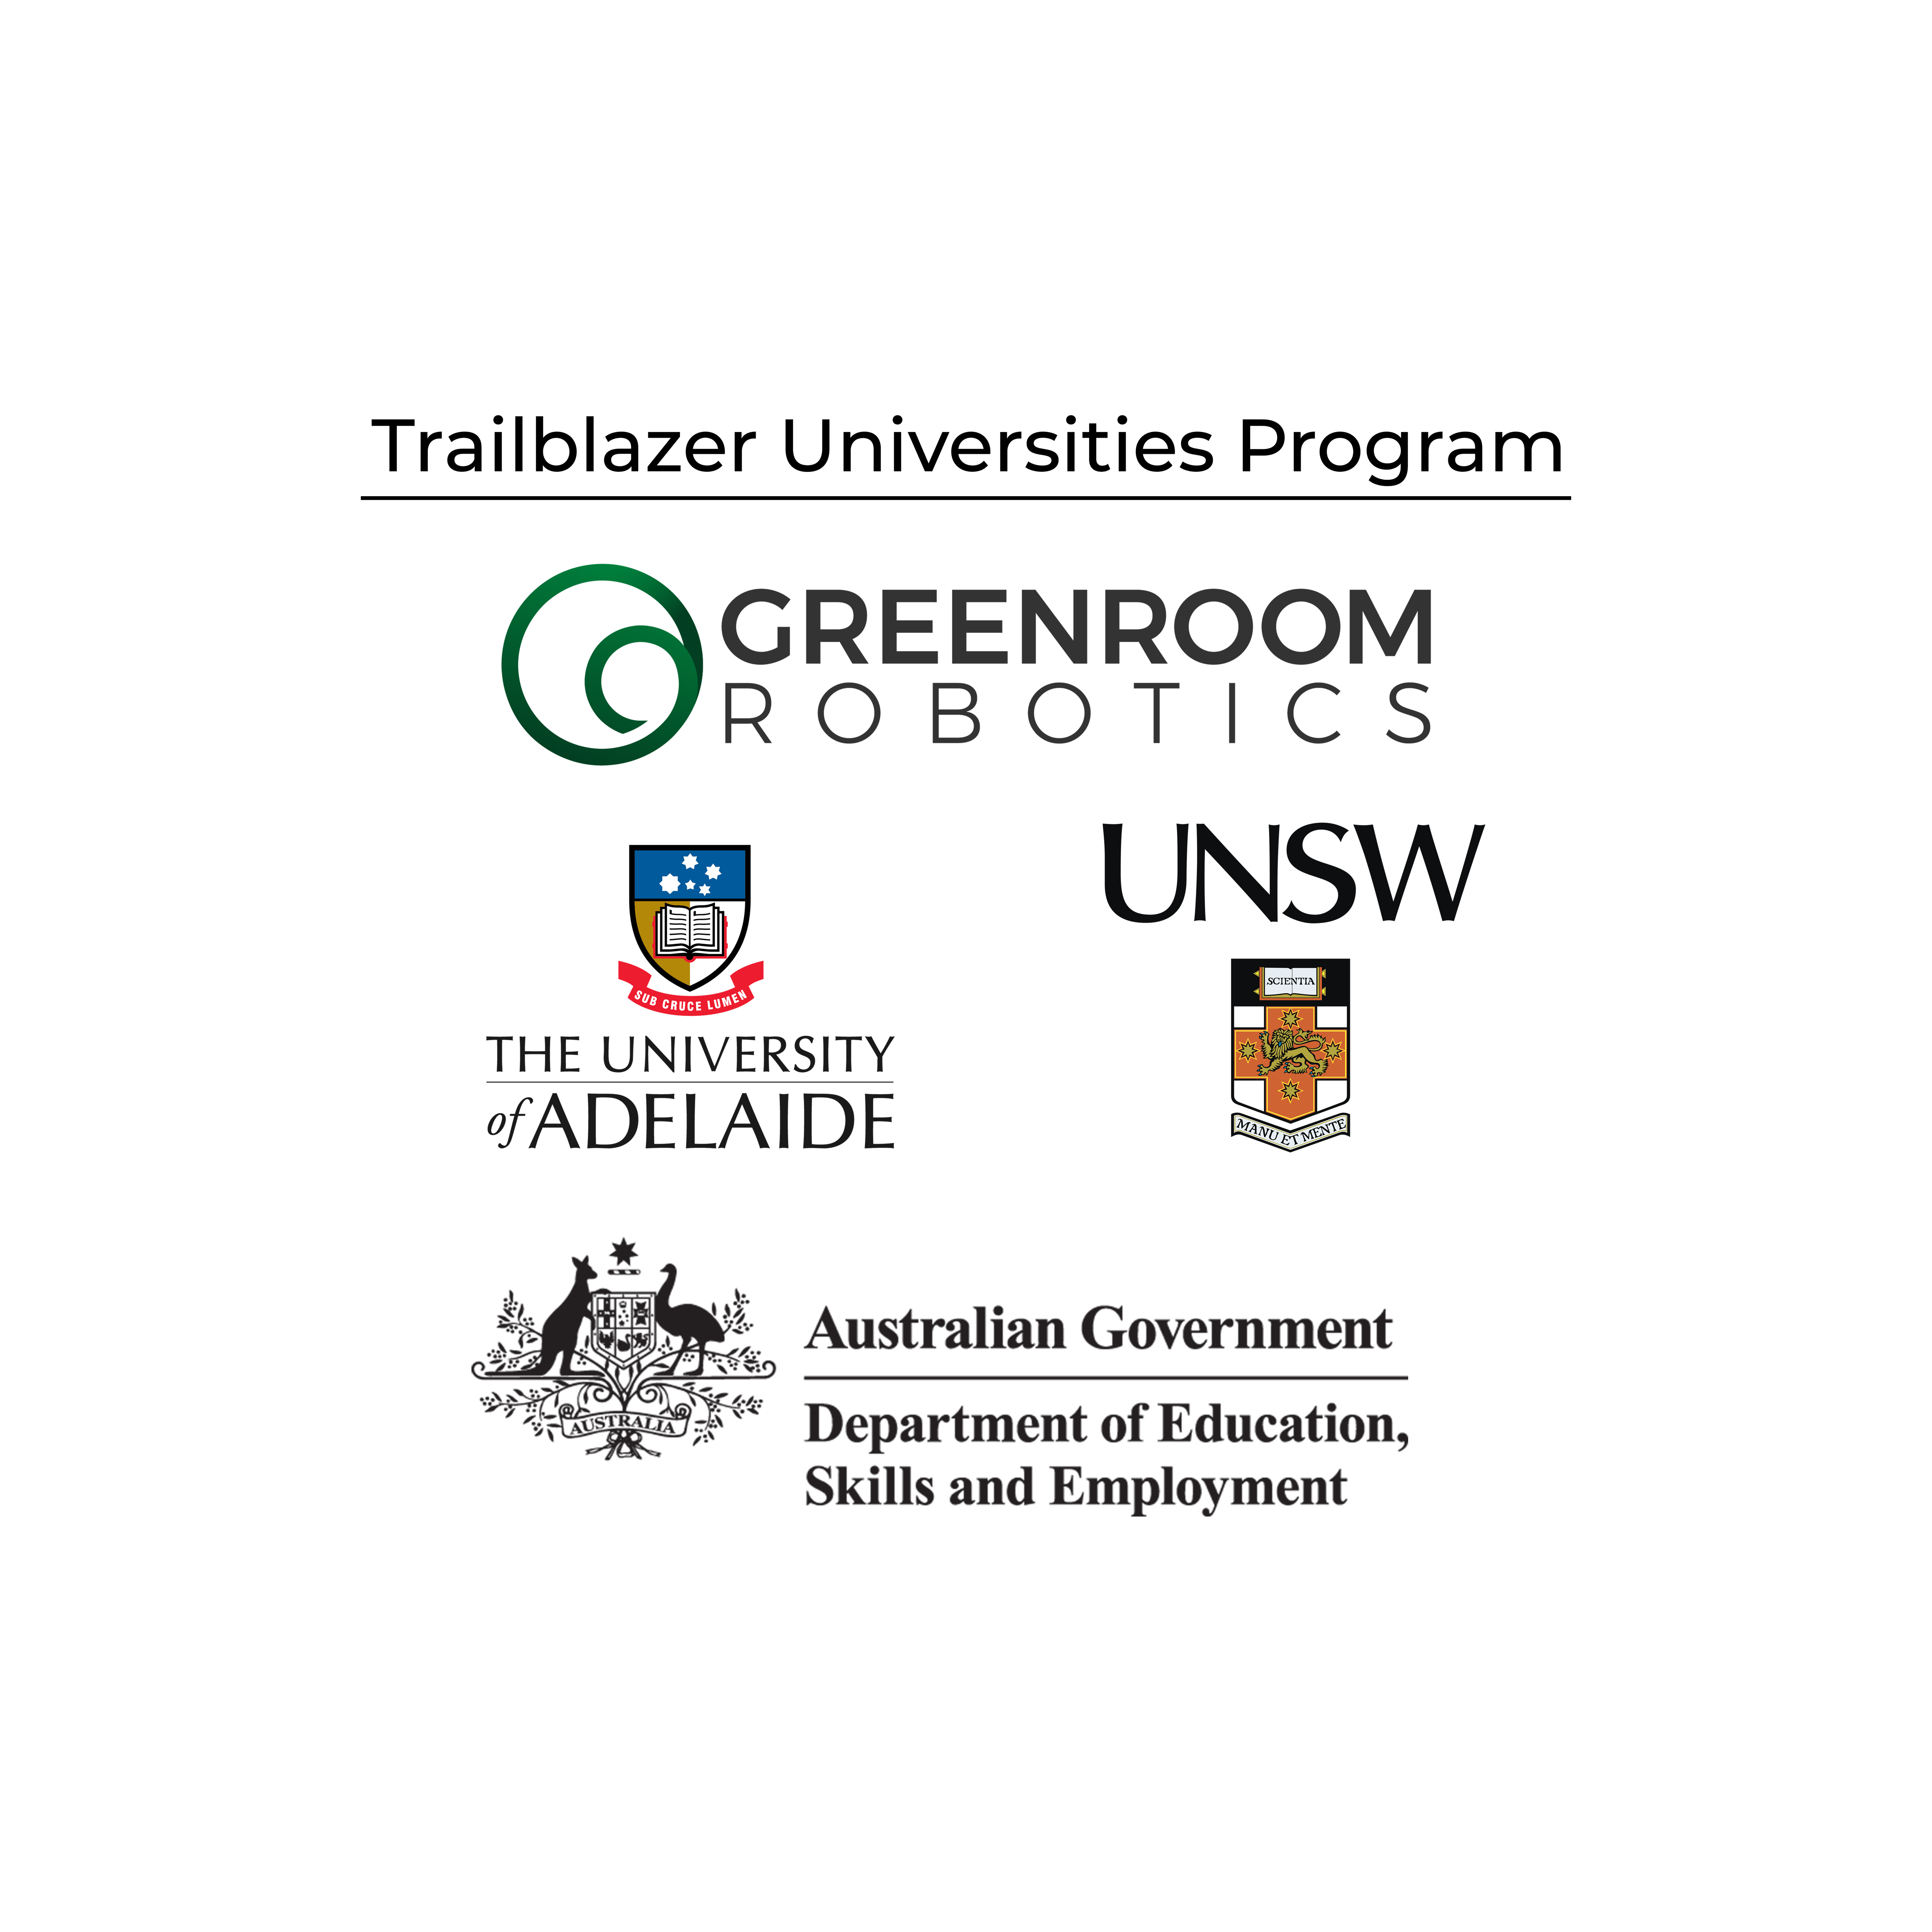 Cover Image for Greenroom Robotics - Trailblazer Program